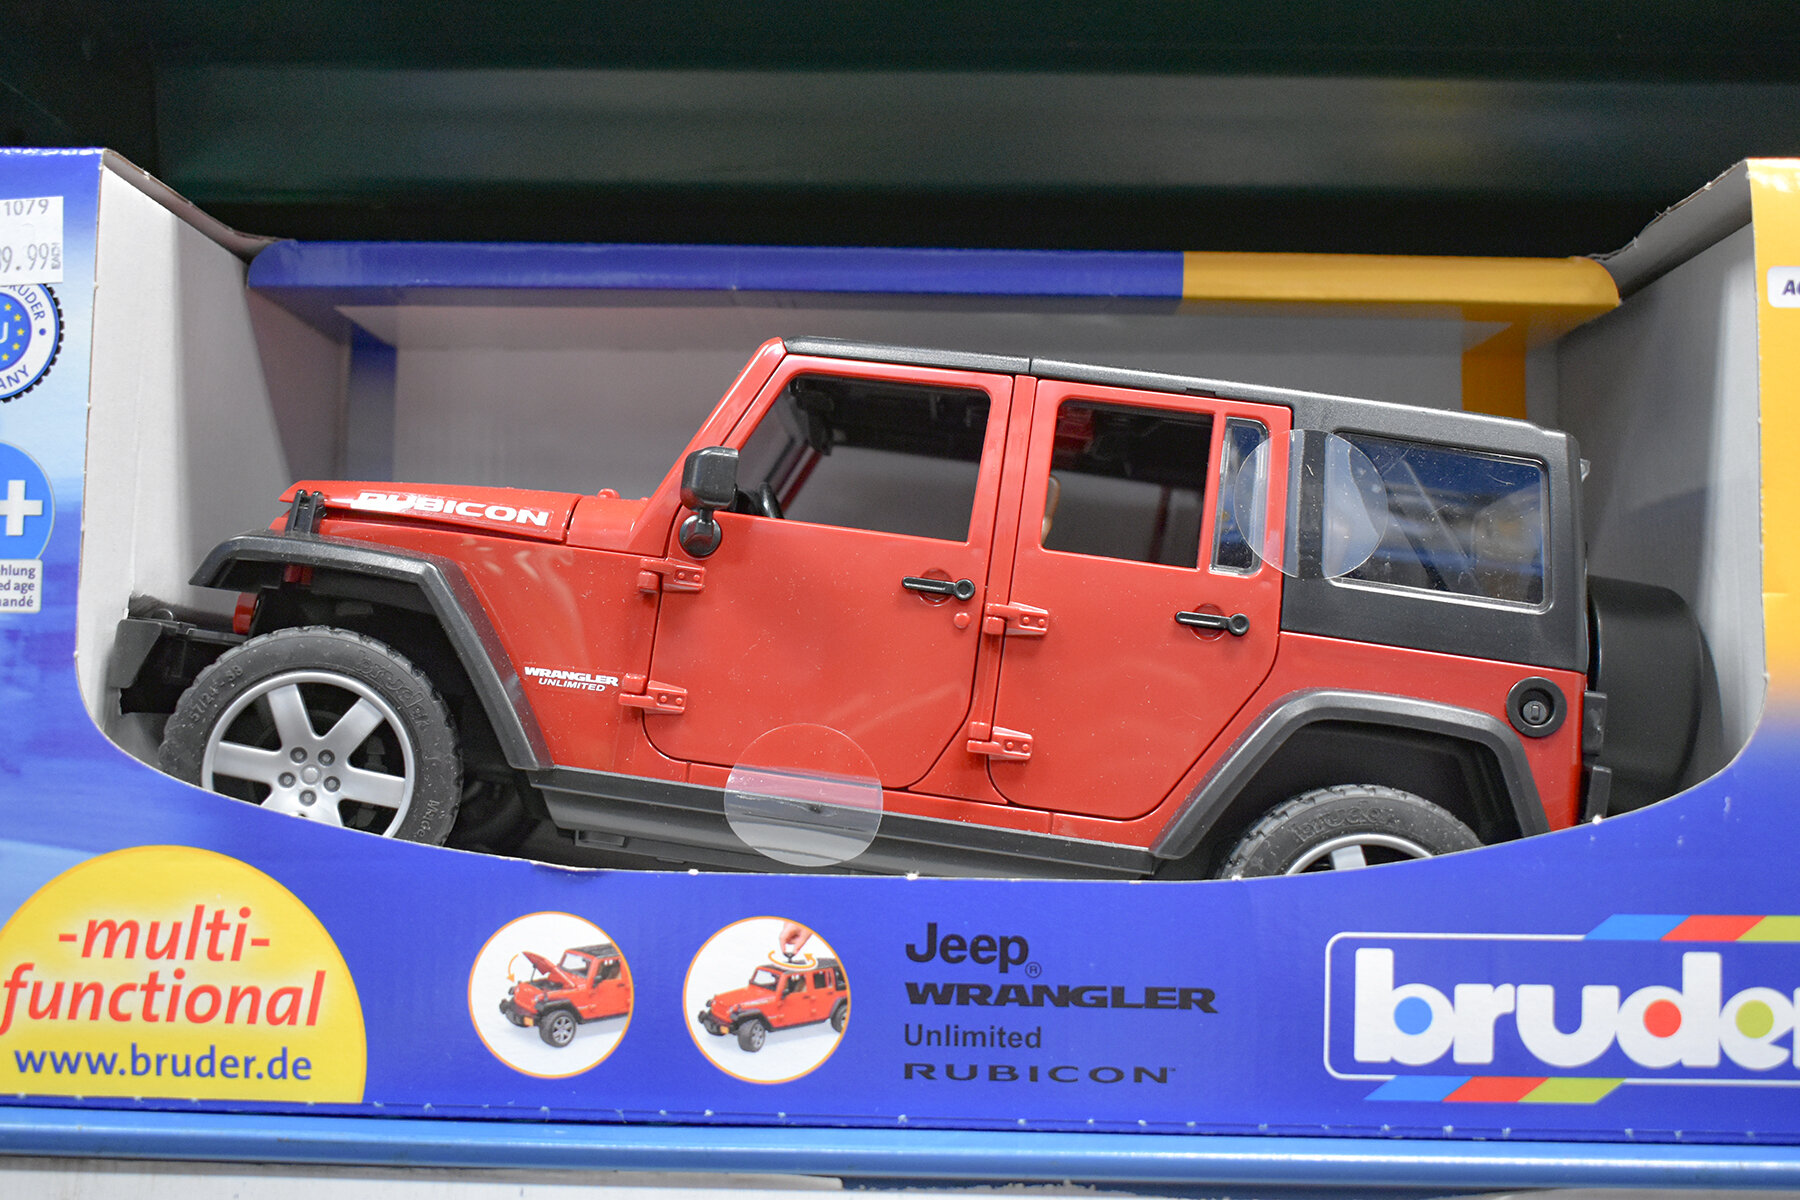 Phillips Toy Mart Bruder Rubicon Jeep toy.JPG